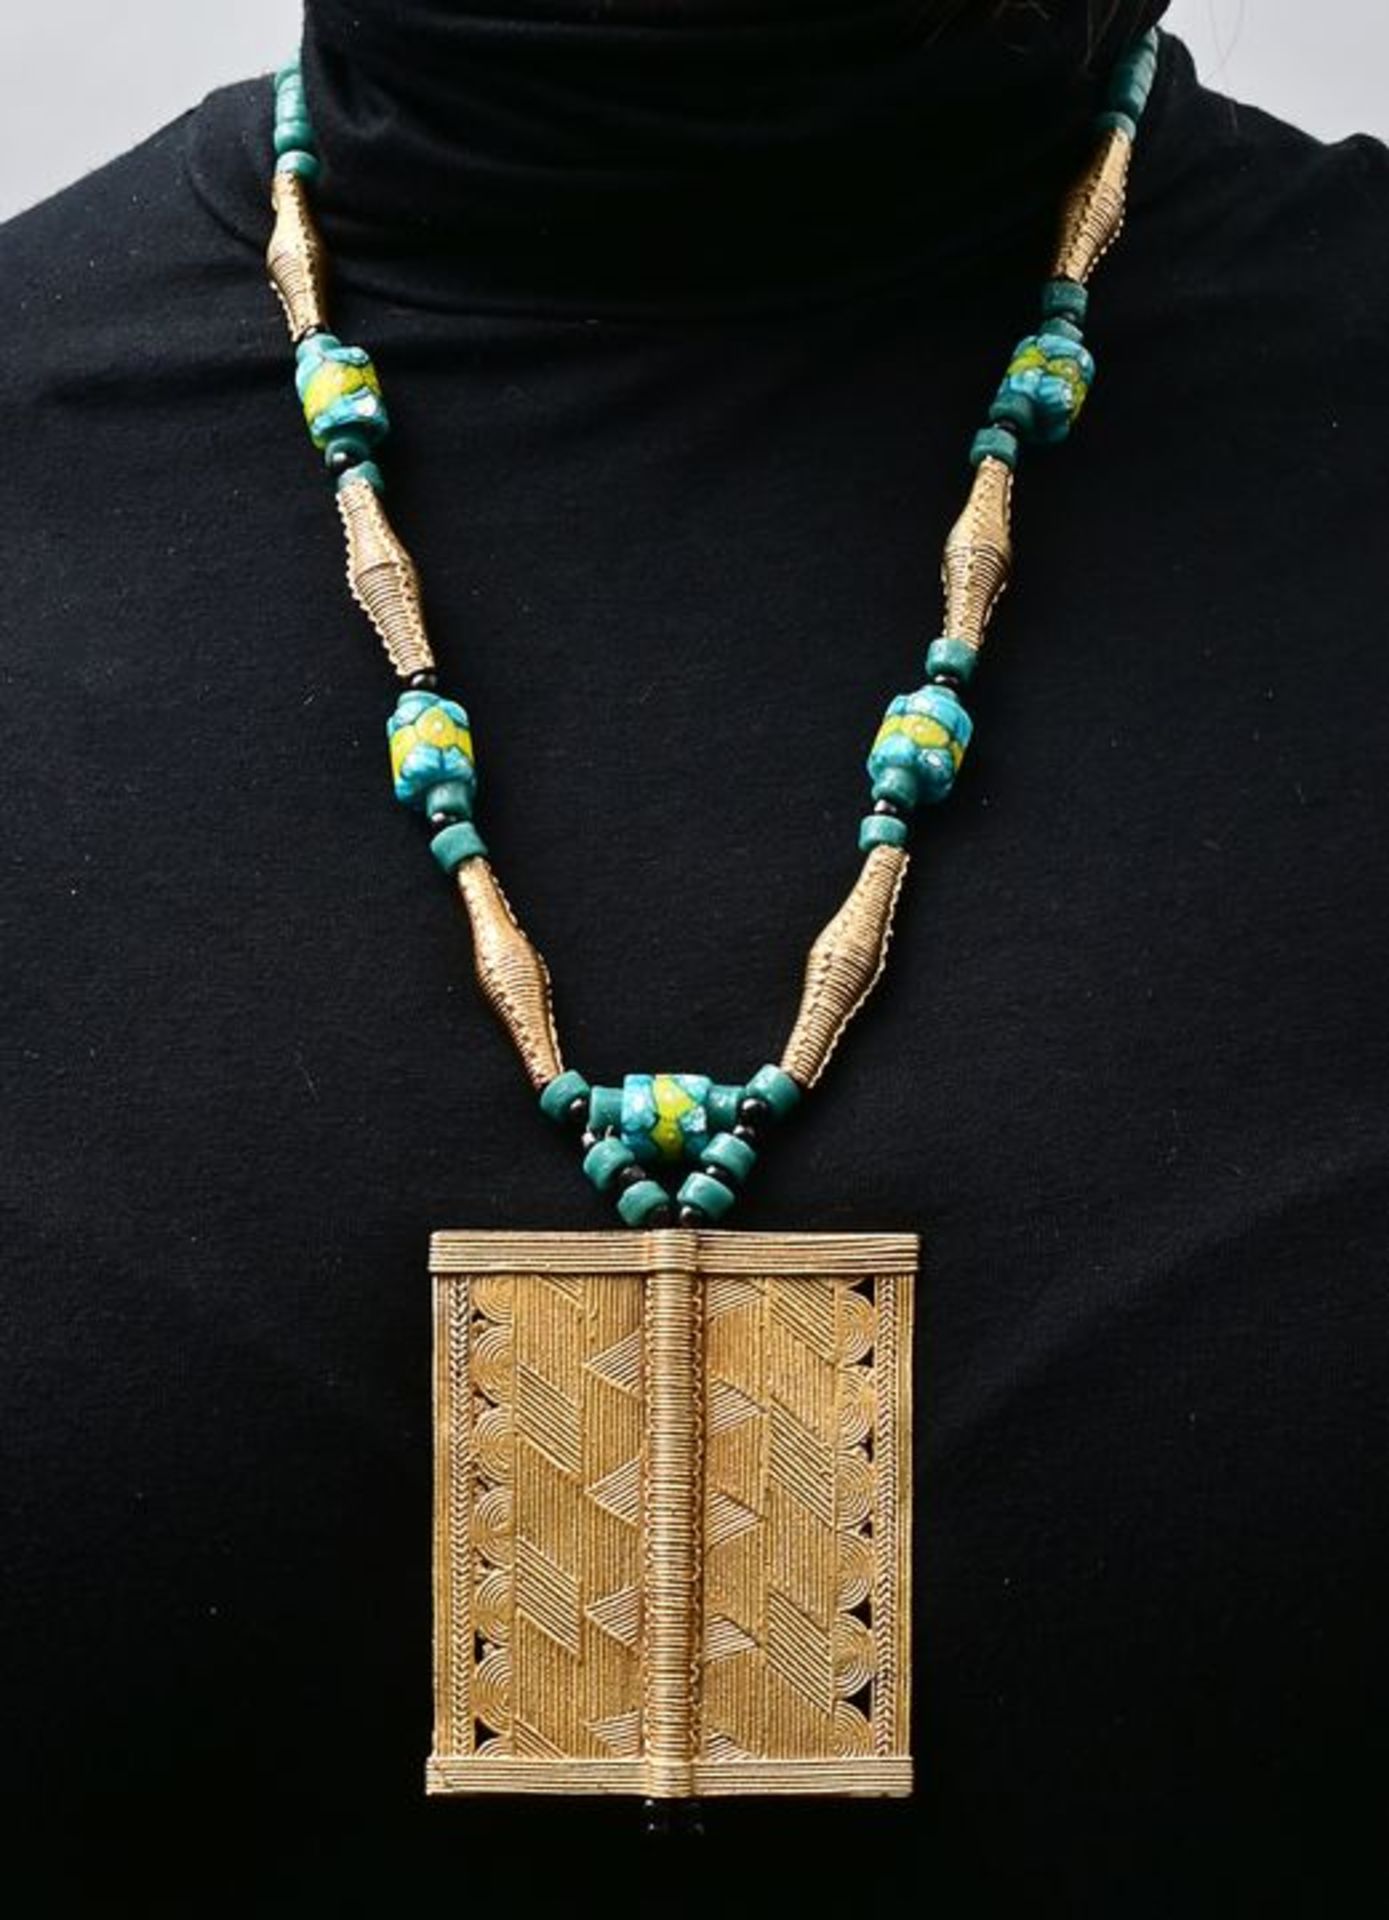 Kette mit Akan-Amulett-Anhänger Westafrika/ necklace with Akan pendant